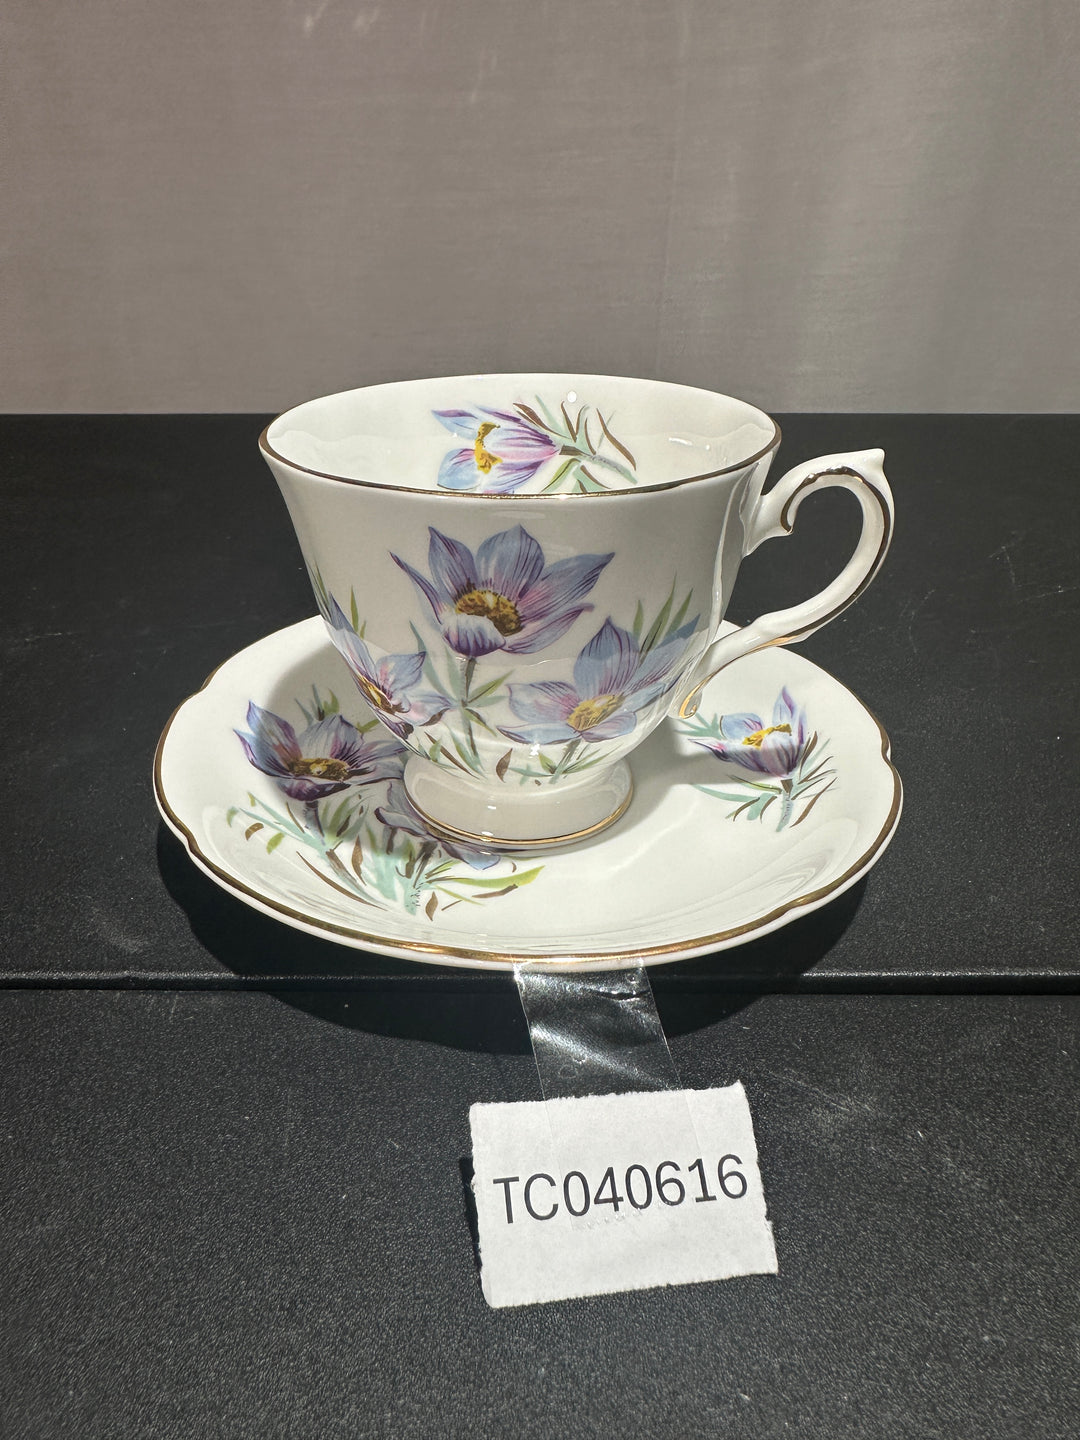 Tea Cup TC040616